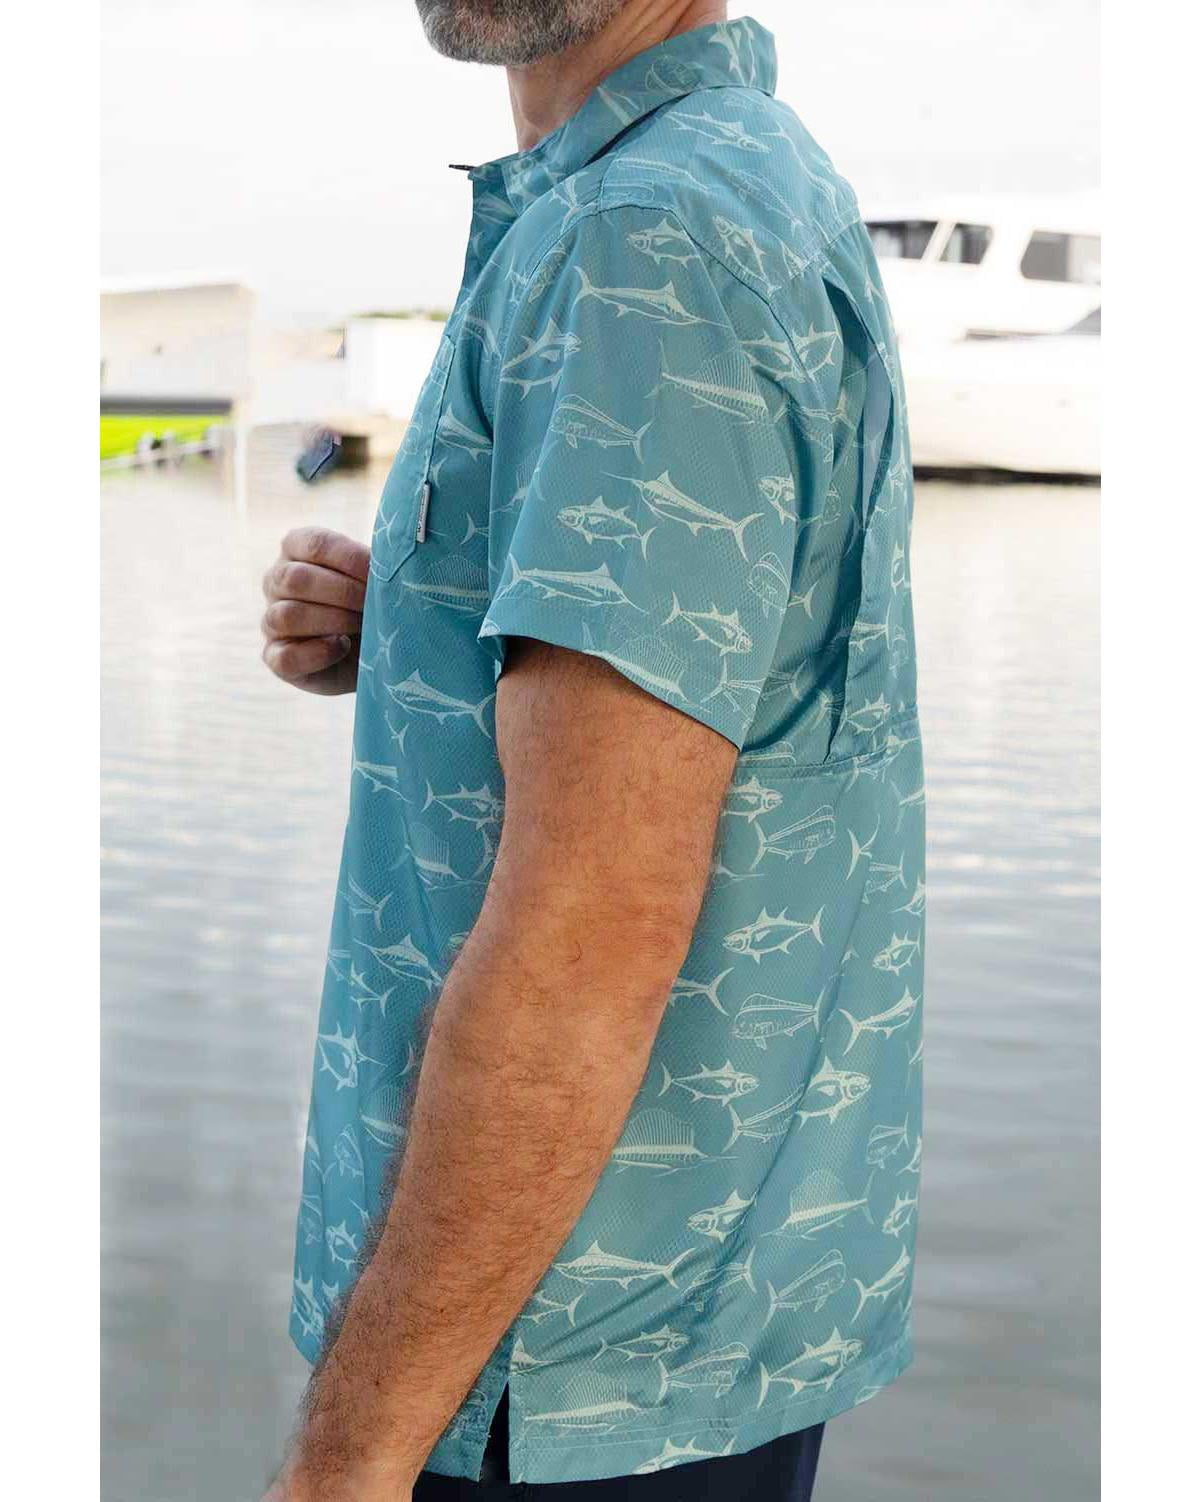 Mens Performance Short Sleeve Button Up Quick Dry Shirt 50+ UPF Fishing  Shirt, Soft Pink, Size: XL, Momentum Comfort Gear 